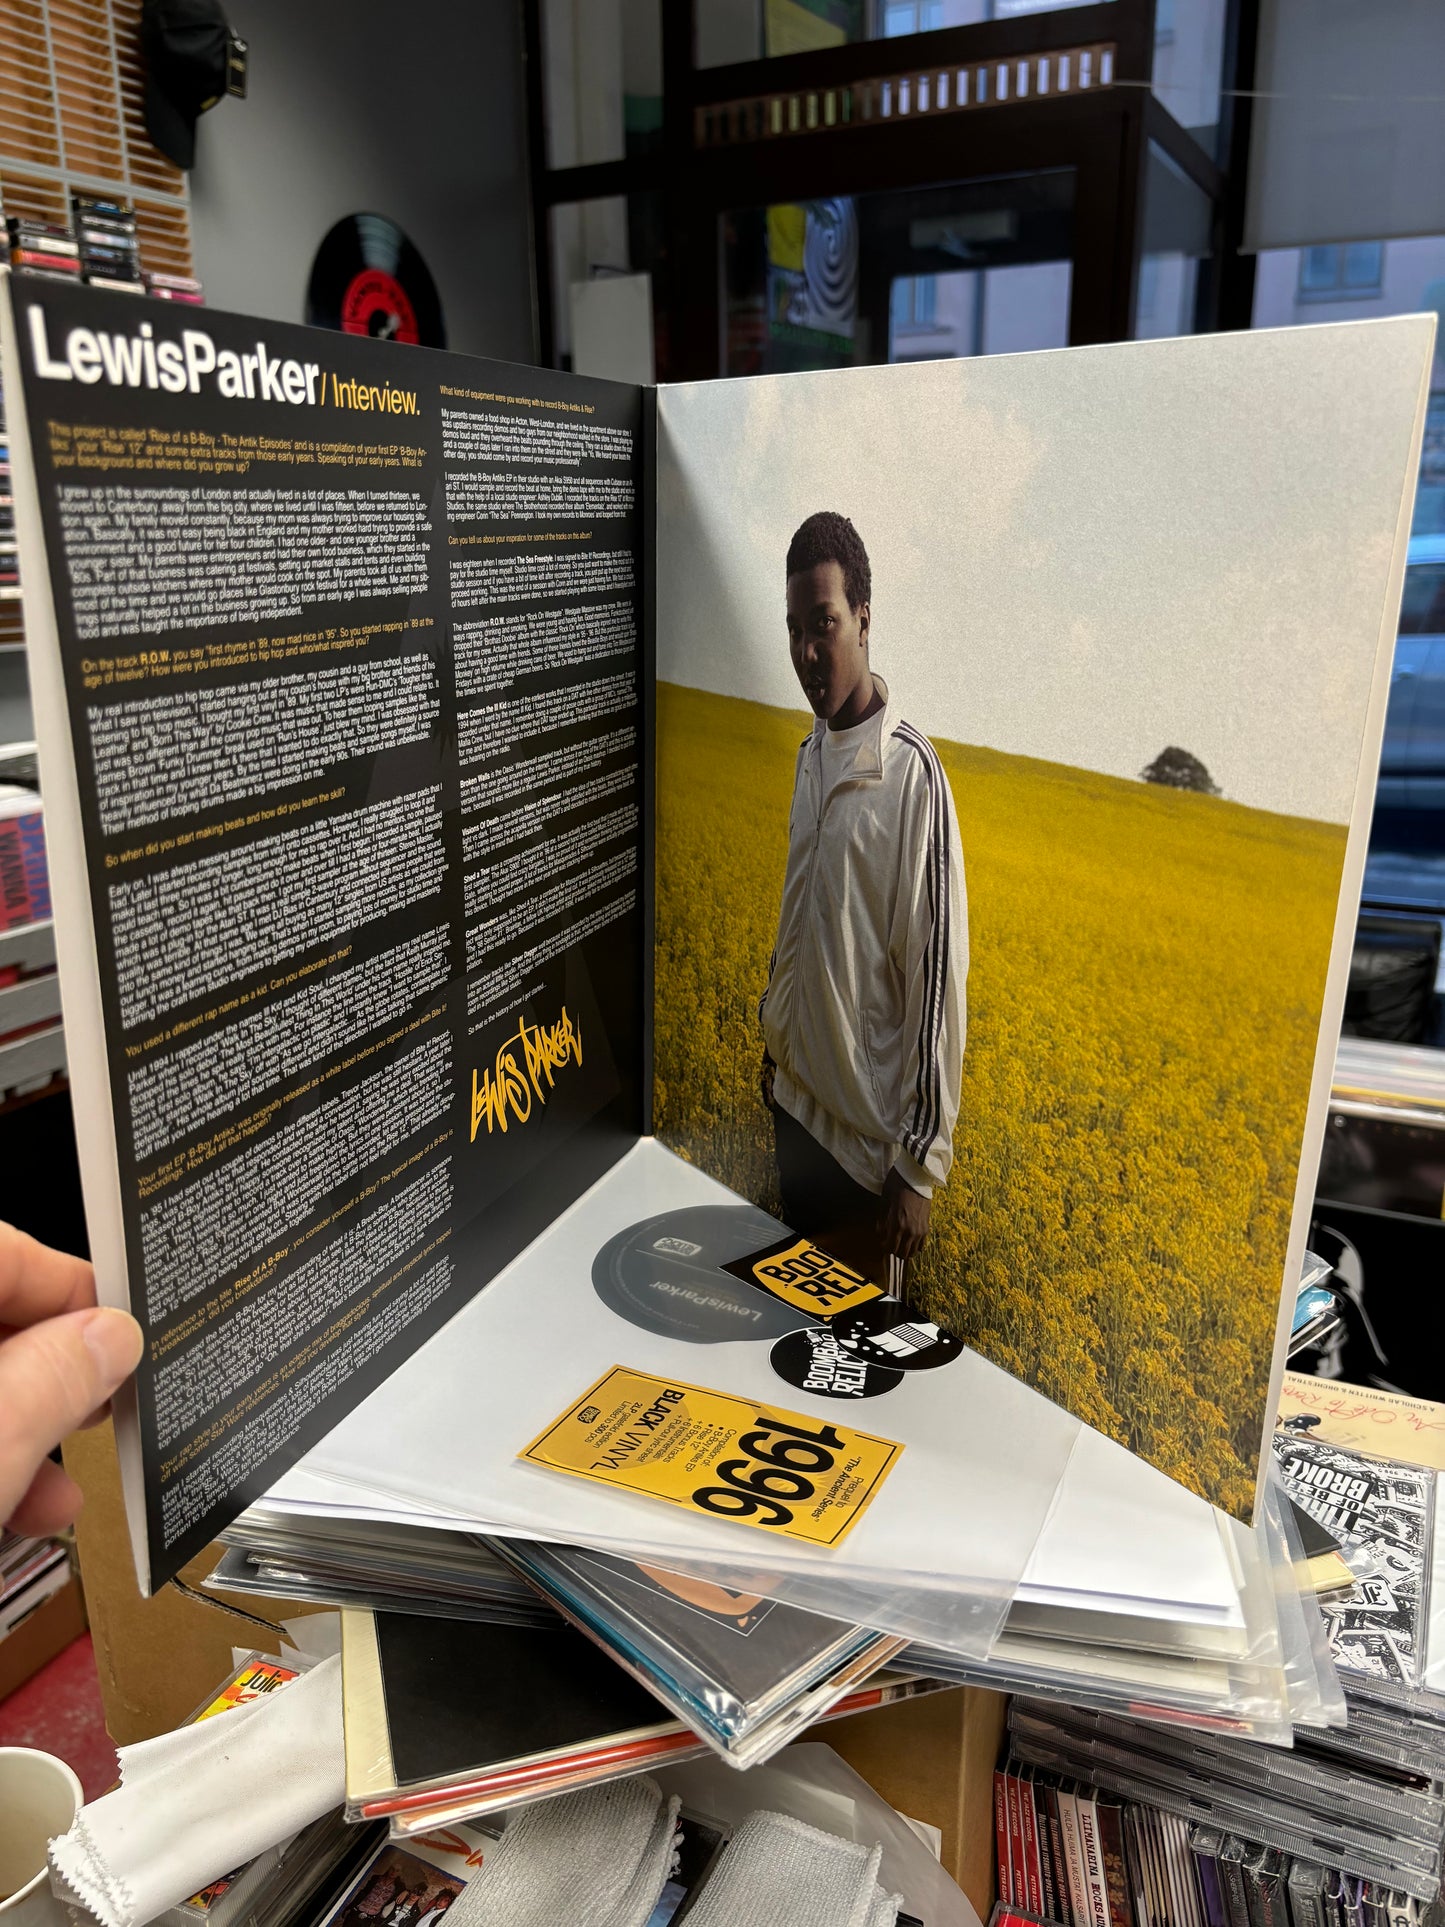 Lewis Parker: Rise Of A B-Boy, 2LP, Limited Edition, black vinyls, Netherlands 2024